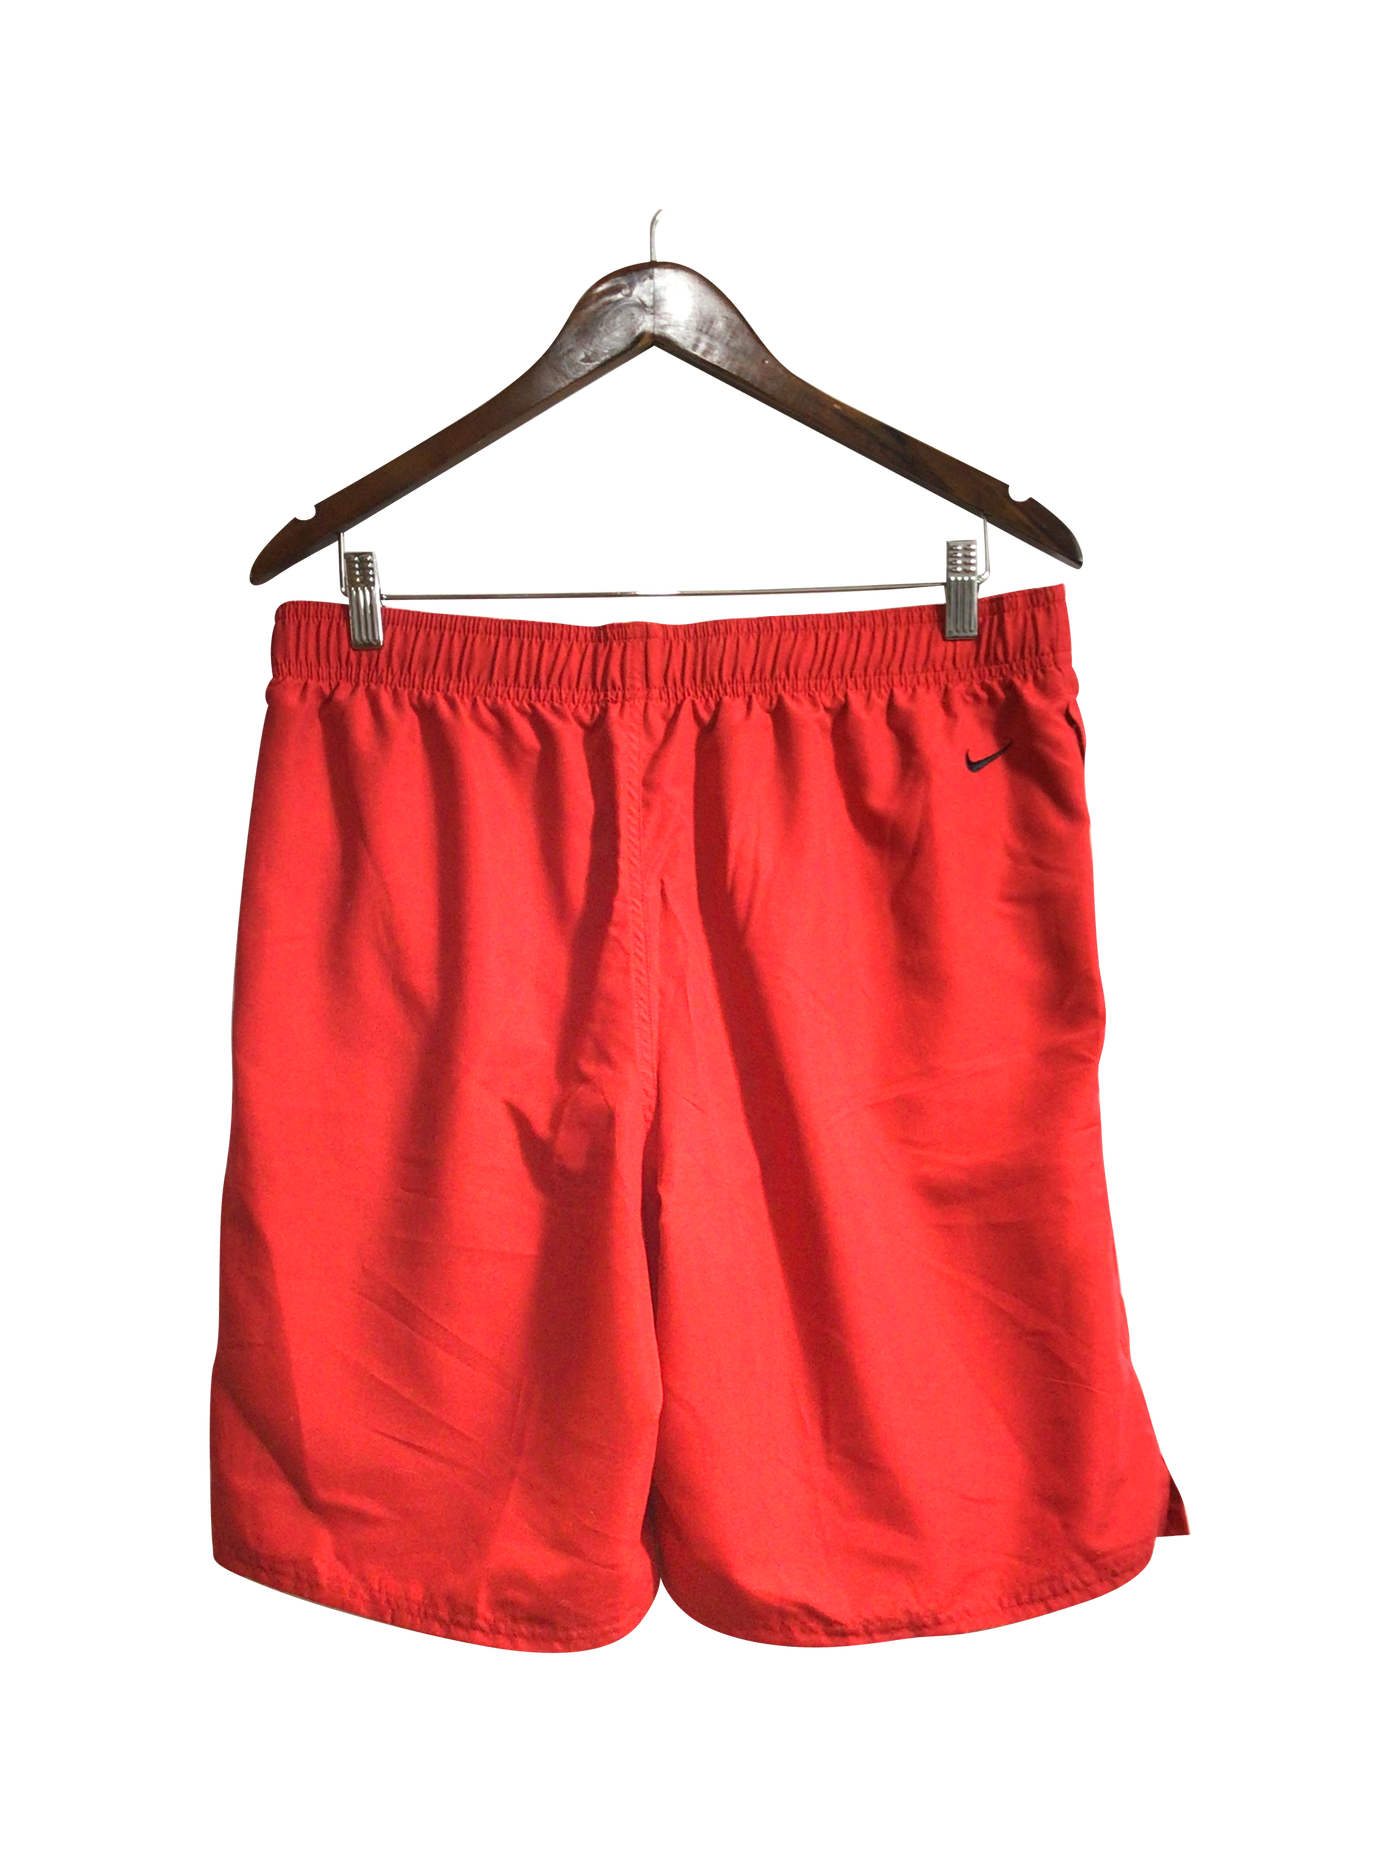 NIKE Women Activewear Shorts & Skirts Regular fit in Red - Size L | 11.99 $ KOOP